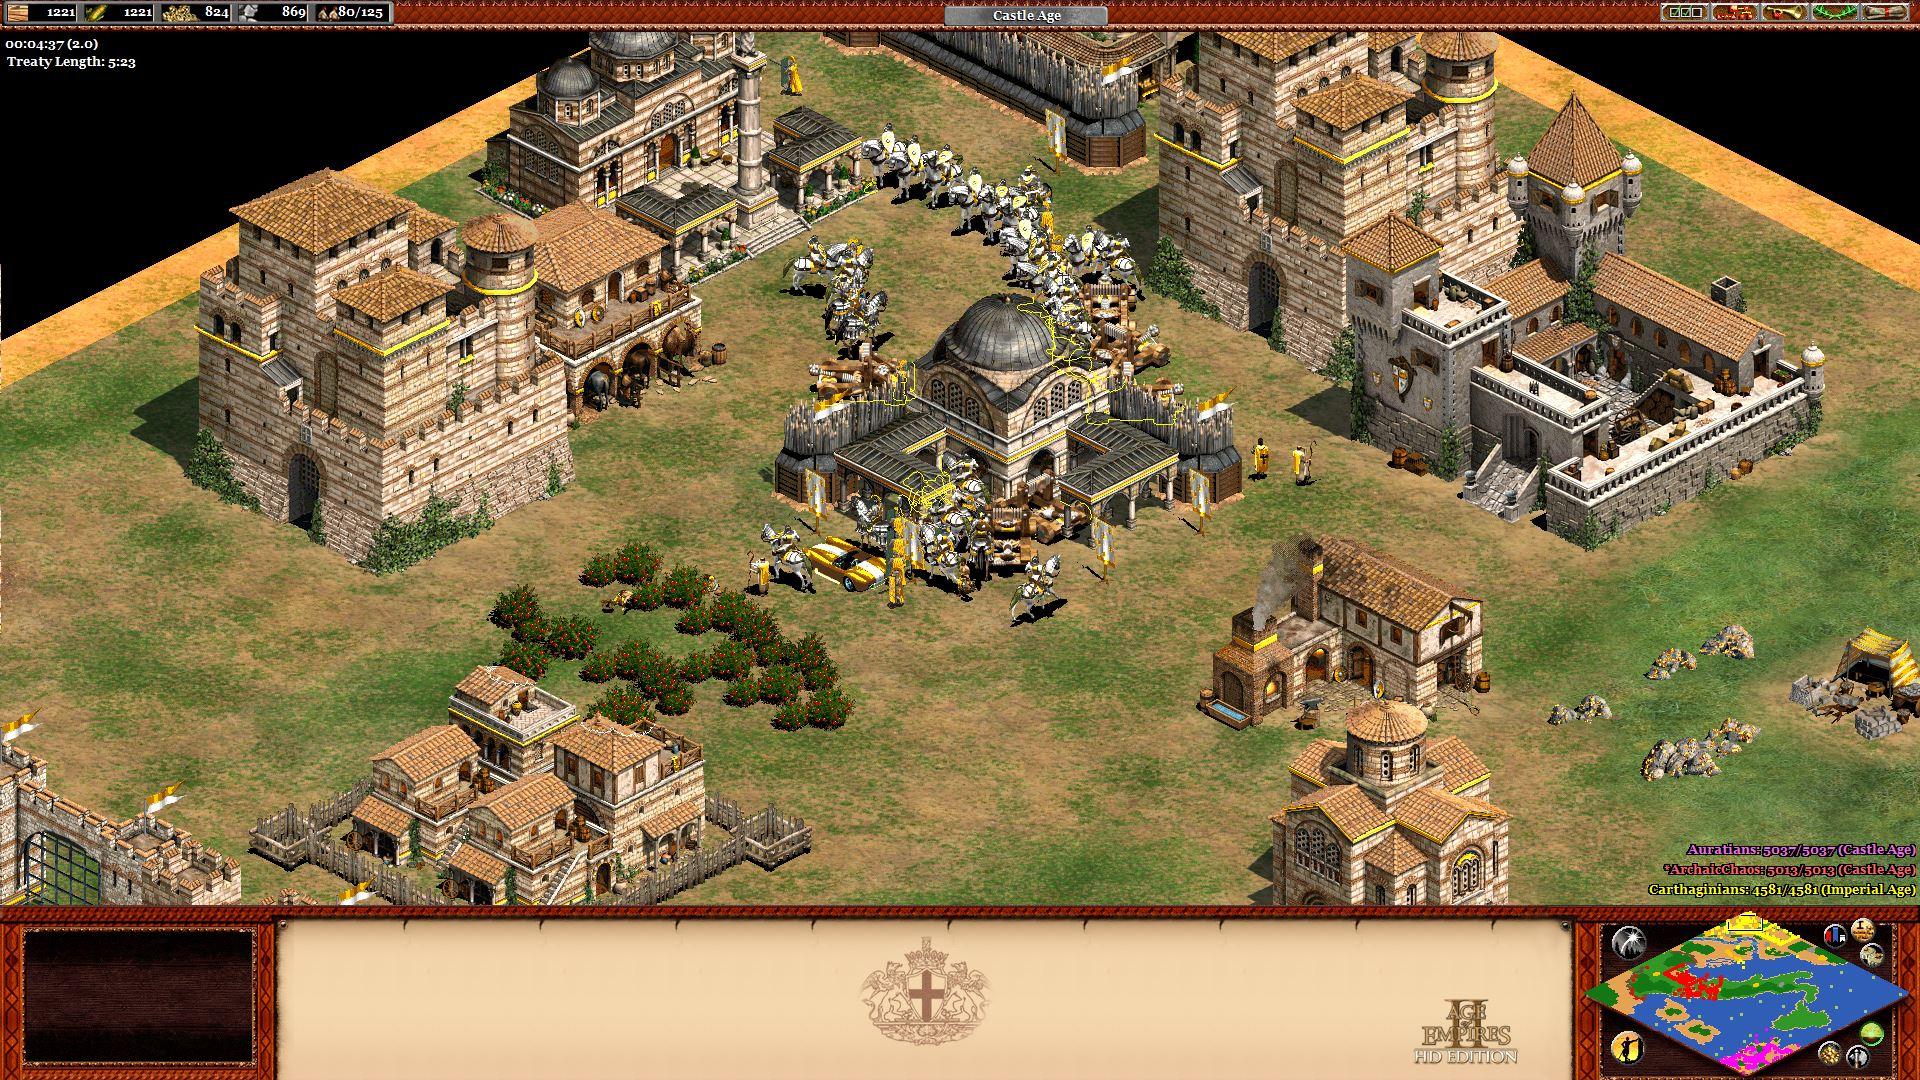 Steam Workshop - Age of Empires II HD, Original old